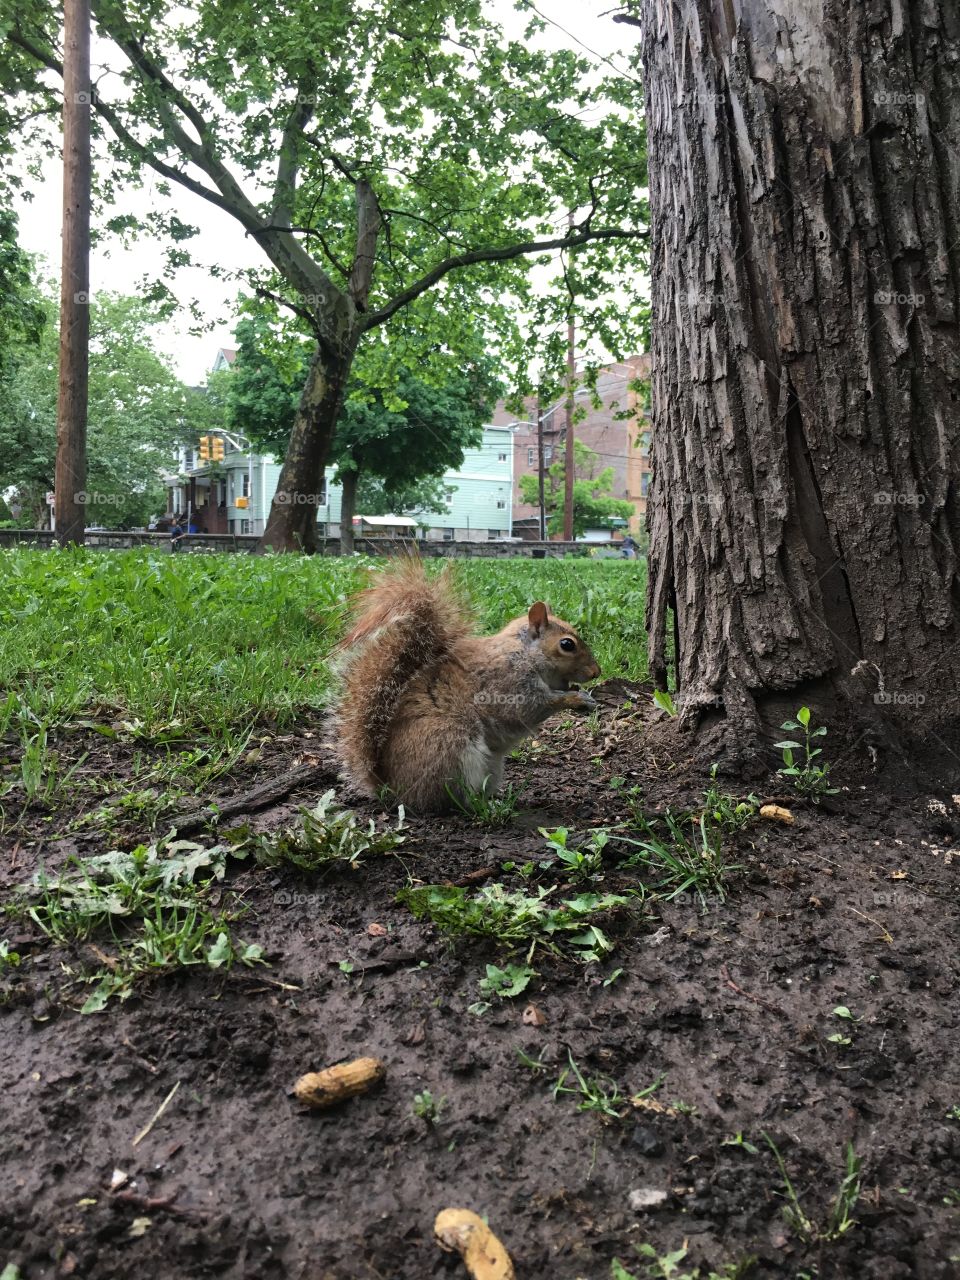 Squirrel lunch in park